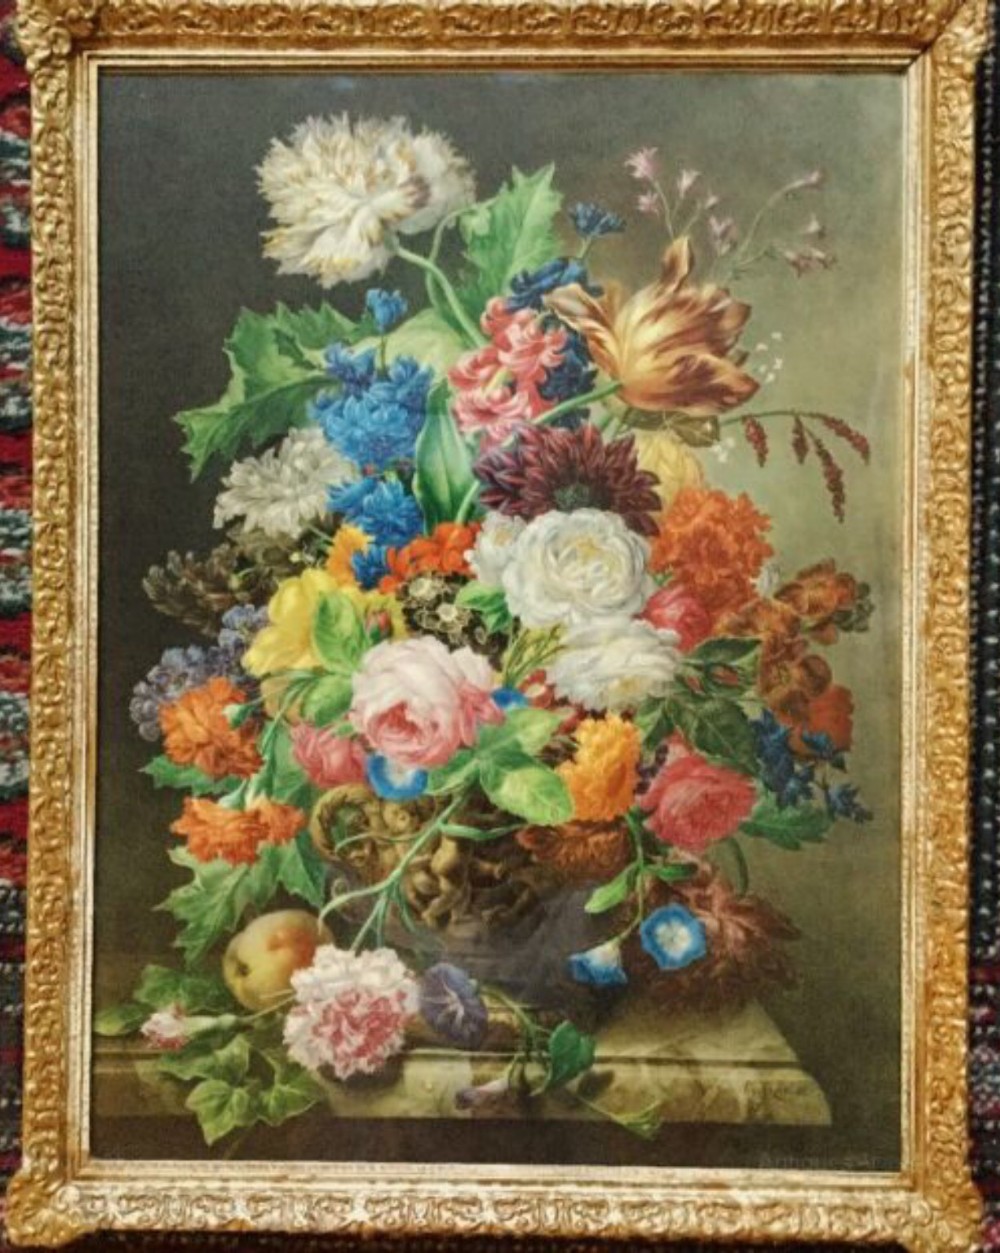 still life flower print after joseph nigg 17821863 after the original portrait painting